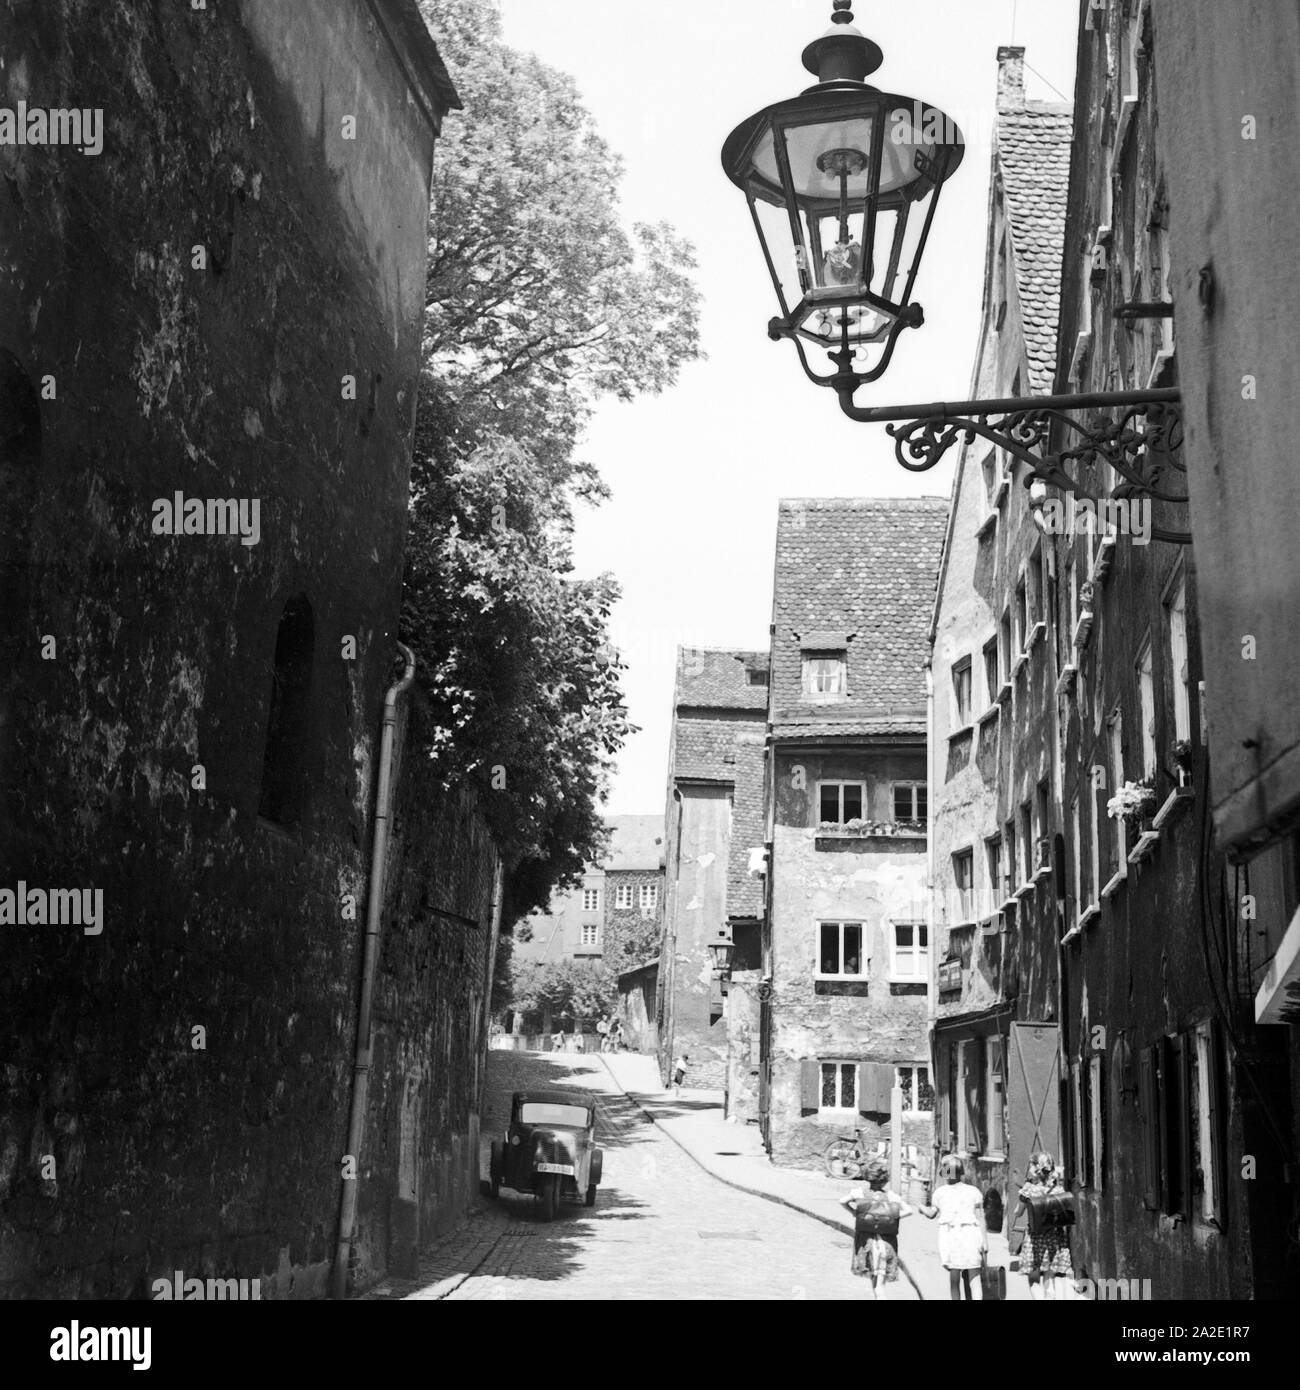 Dans den engen Gassen der Altstadt von Augsburg, Deutschland 1930 er Jahre. Les ruelles de la vieille ville d'Augsburg, Allemagne 1930. Banque D'Images